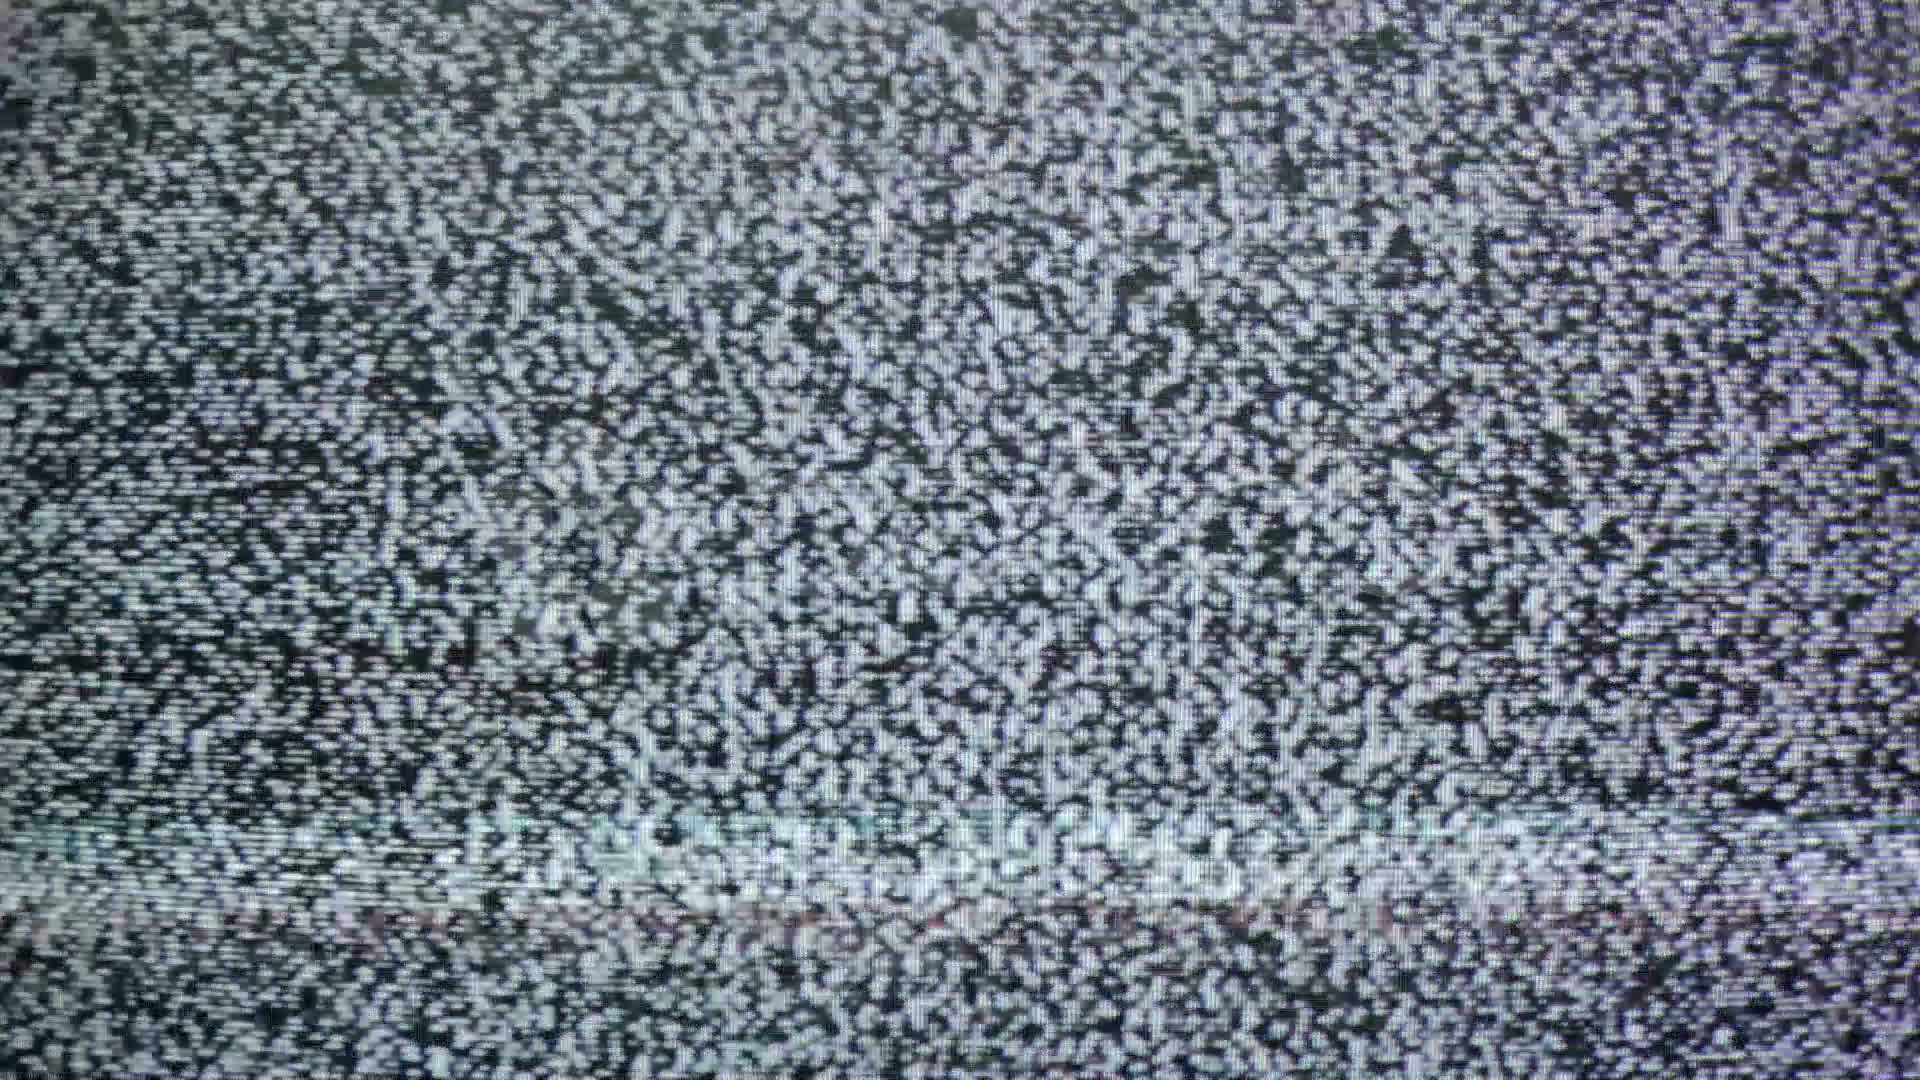 Tv Static Desktop Wallpaper Close Up Of On Screen